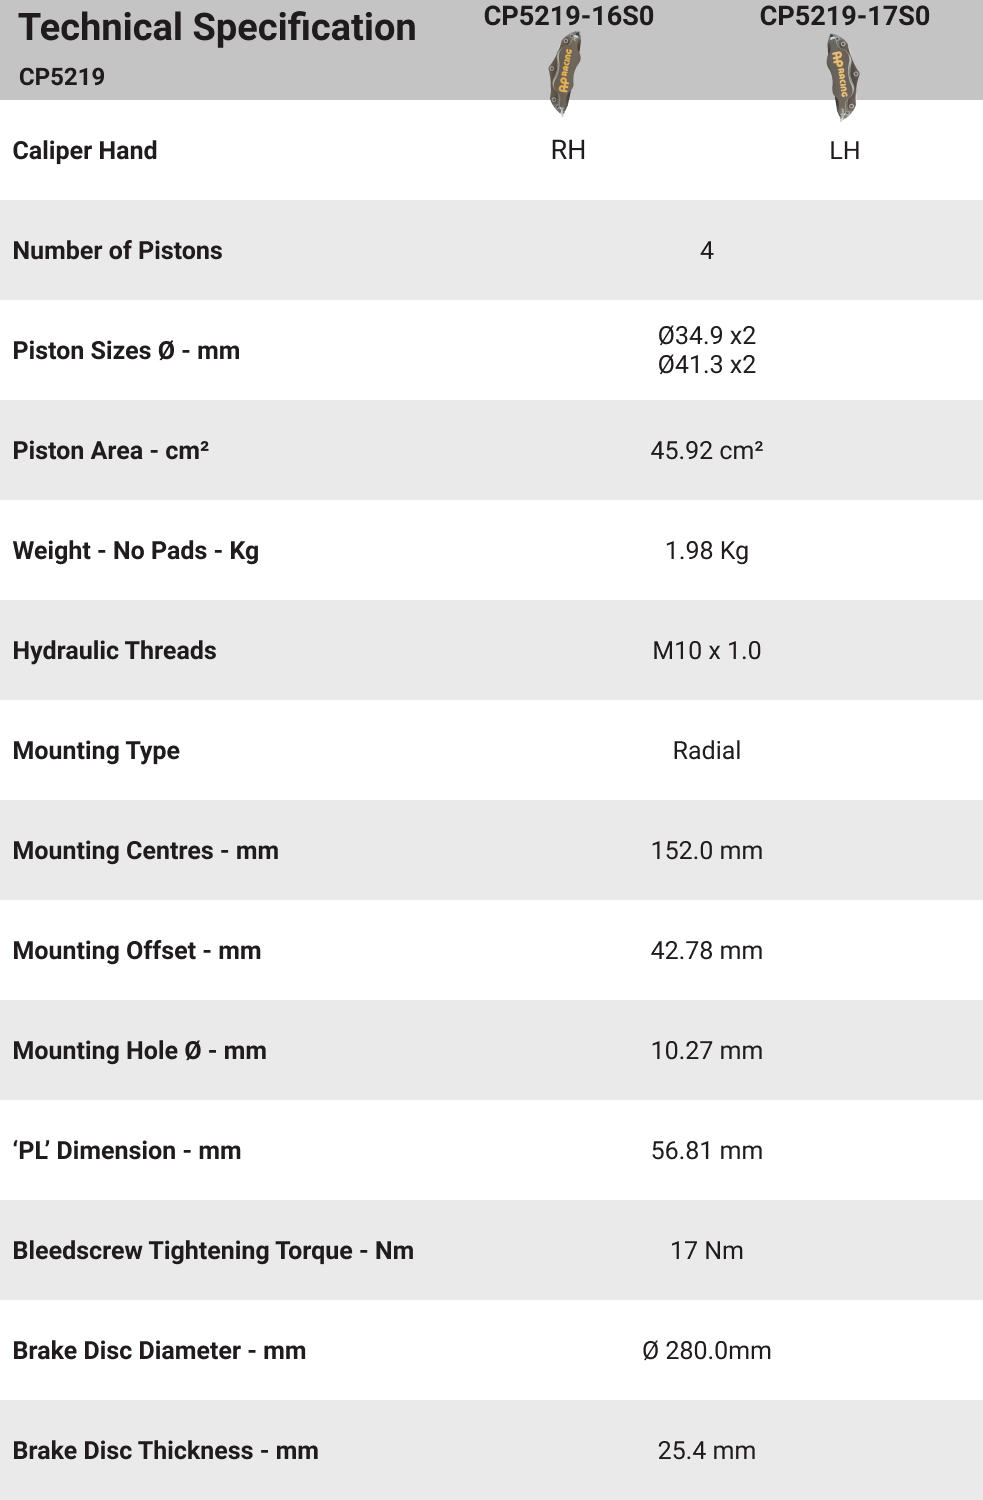 CP5219 AP Racing 4 Piston Radial 2 piece billet Caliper Technical Specification